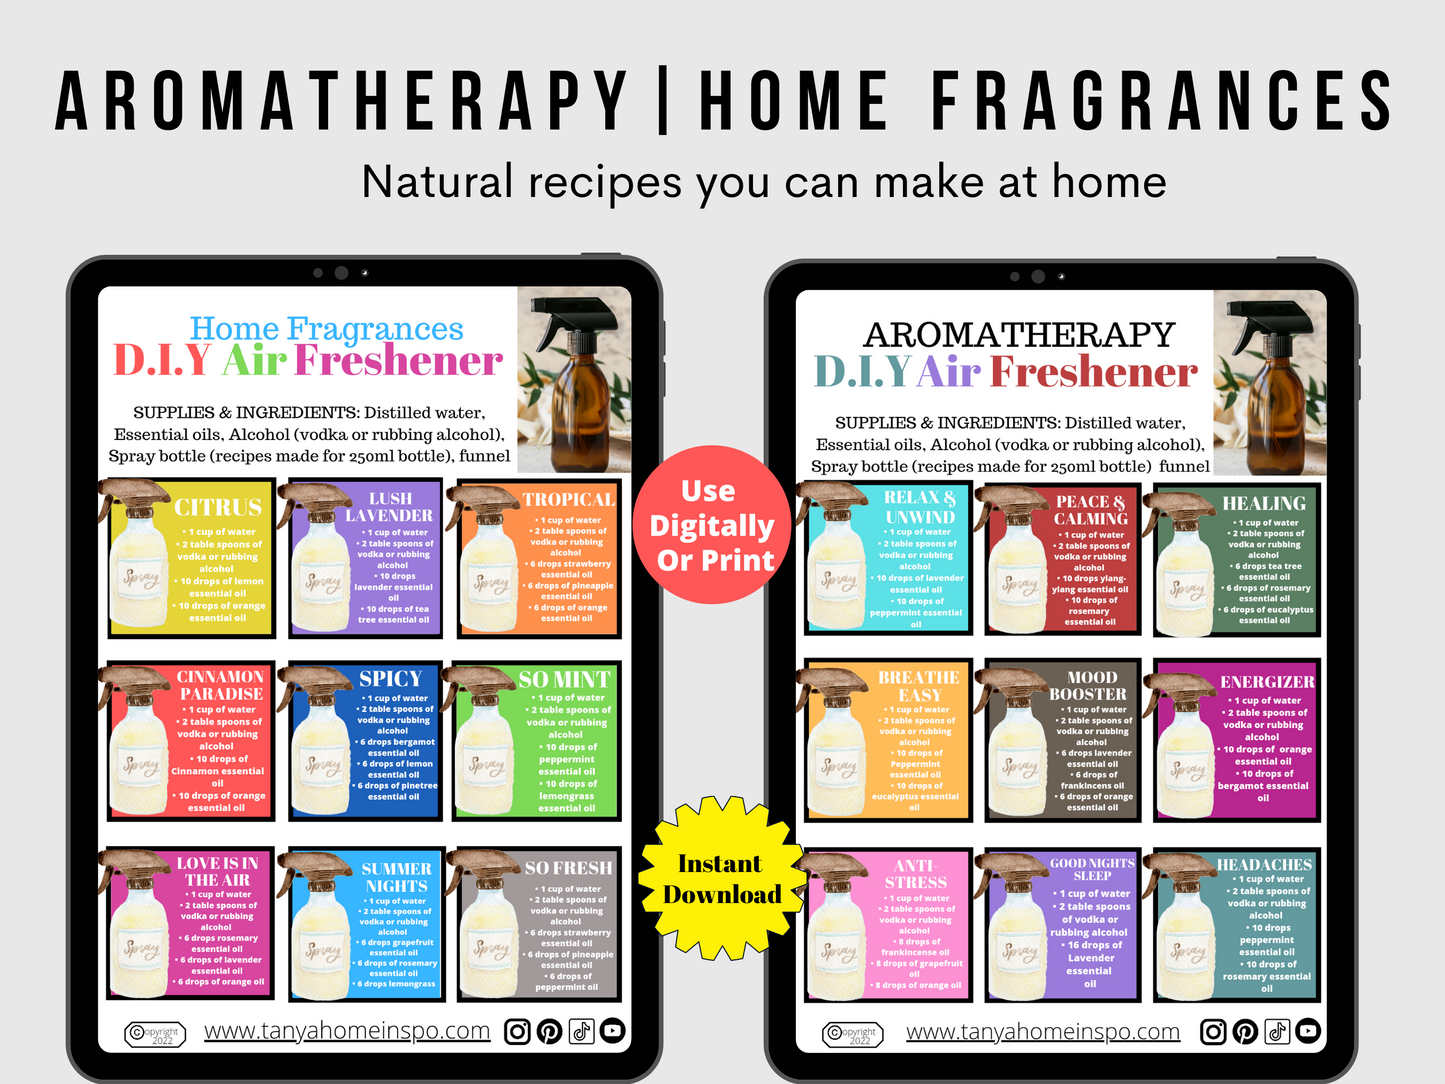 Printable Air Freshener Recipes - Digital PDF